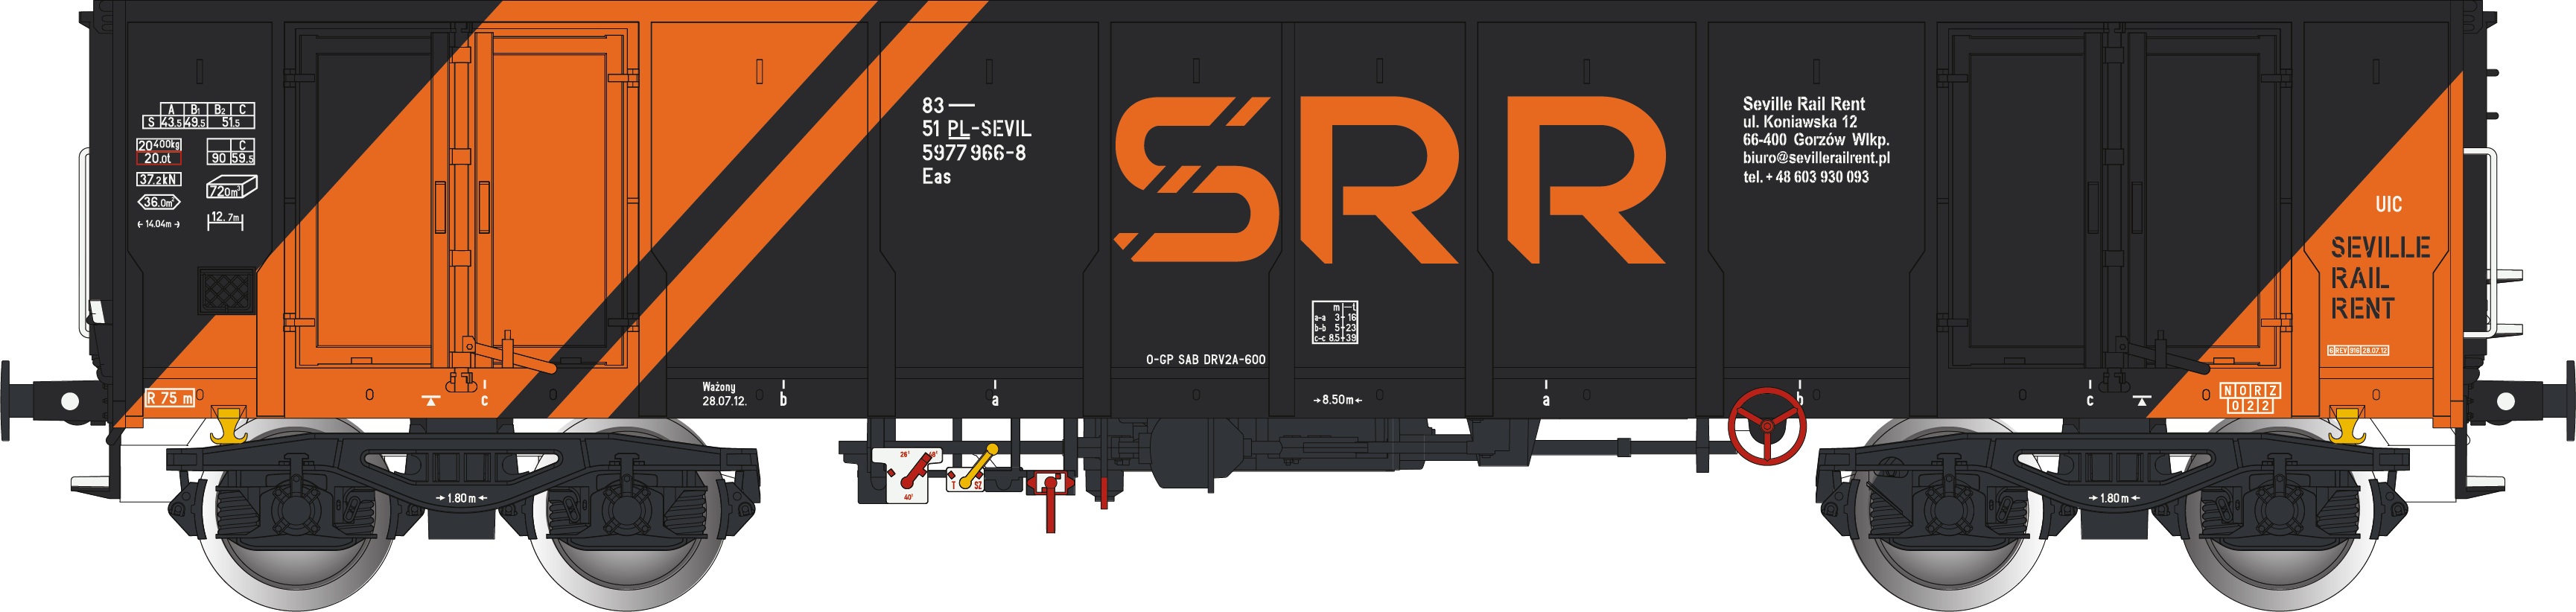 SRR Eas Hochbordwagen Ep.6, schwarz/orange, SRR - Seville Rail Rent, UIC